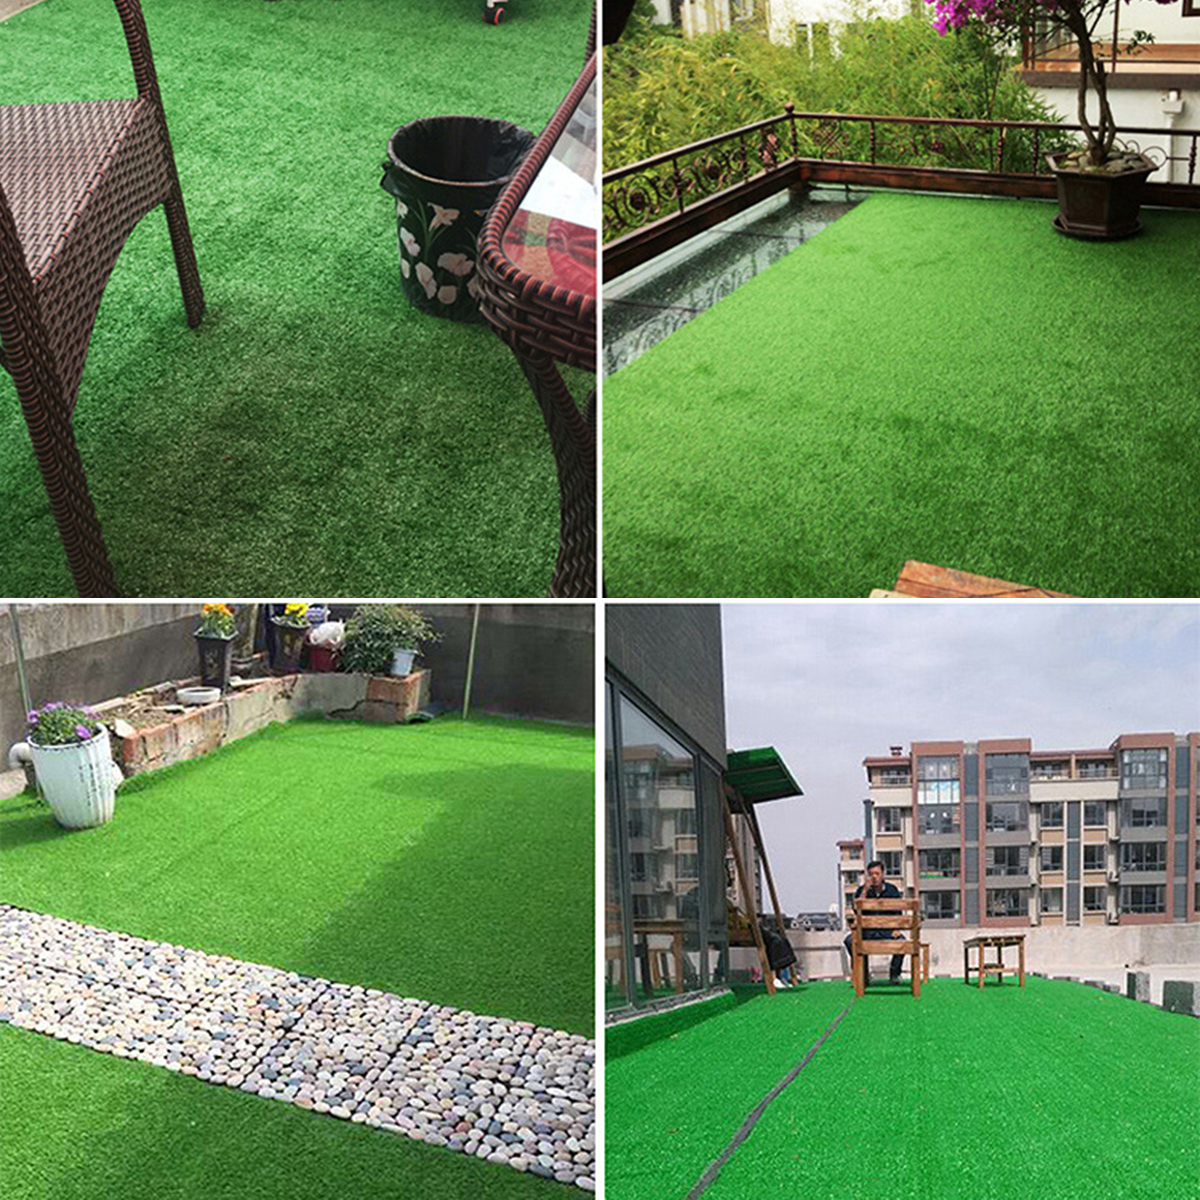 Artificial-Lawn-Turf-Grass-Artificial-Lawn-Carpet-Simulation-Outdoor-Green-Lawn-for-Garden-Patio-Lan-1789361-8